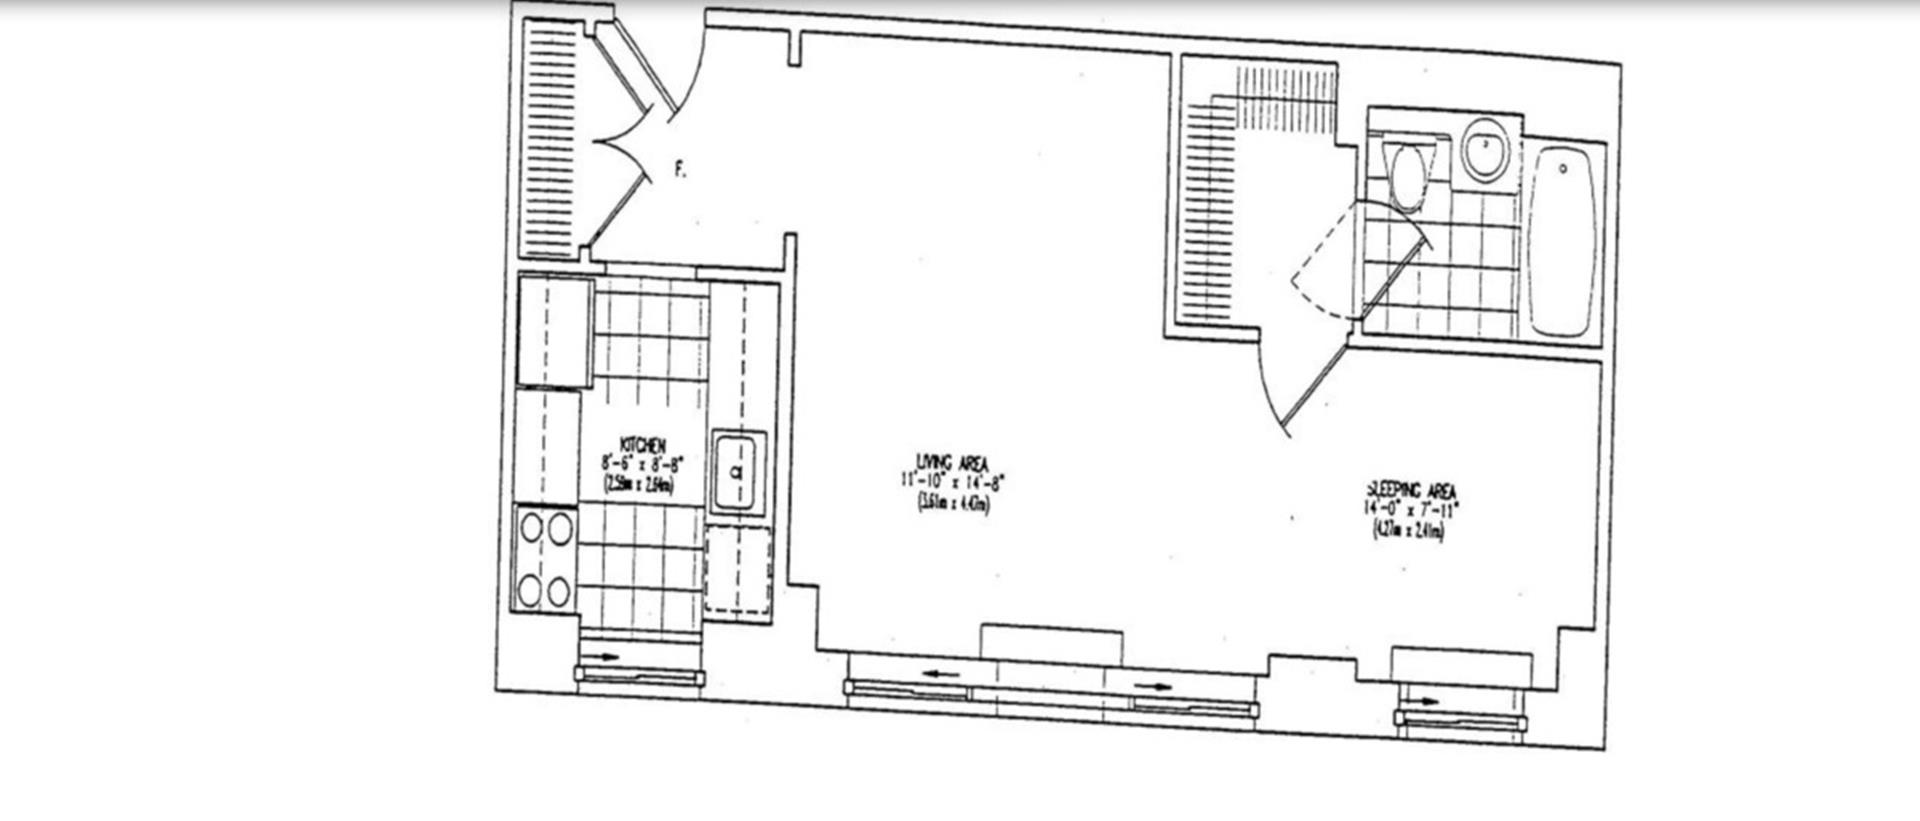 Floorplan for 401 East 60th Street, 6L